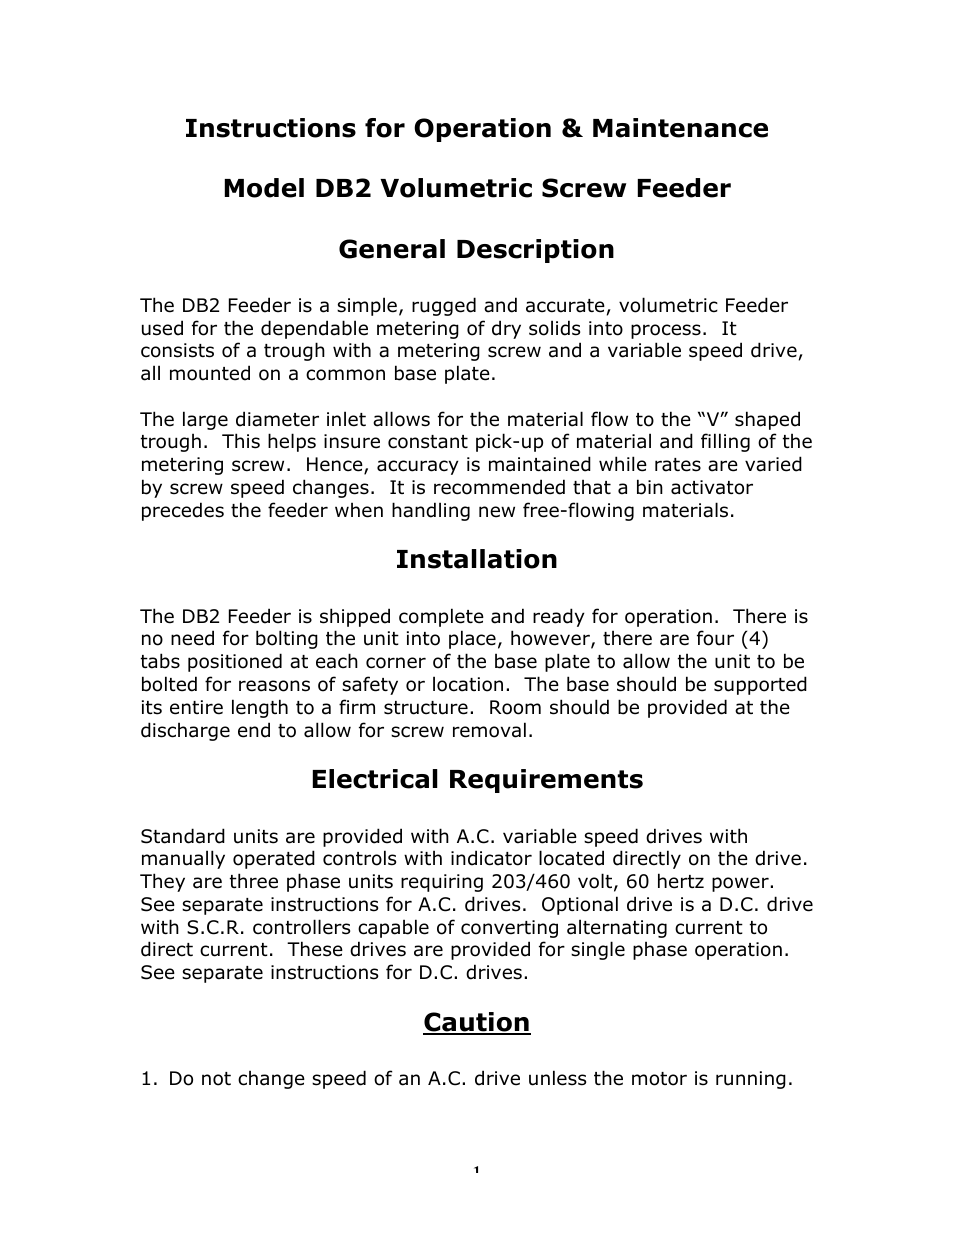 Model DB2 Volumetric Screw Feeder